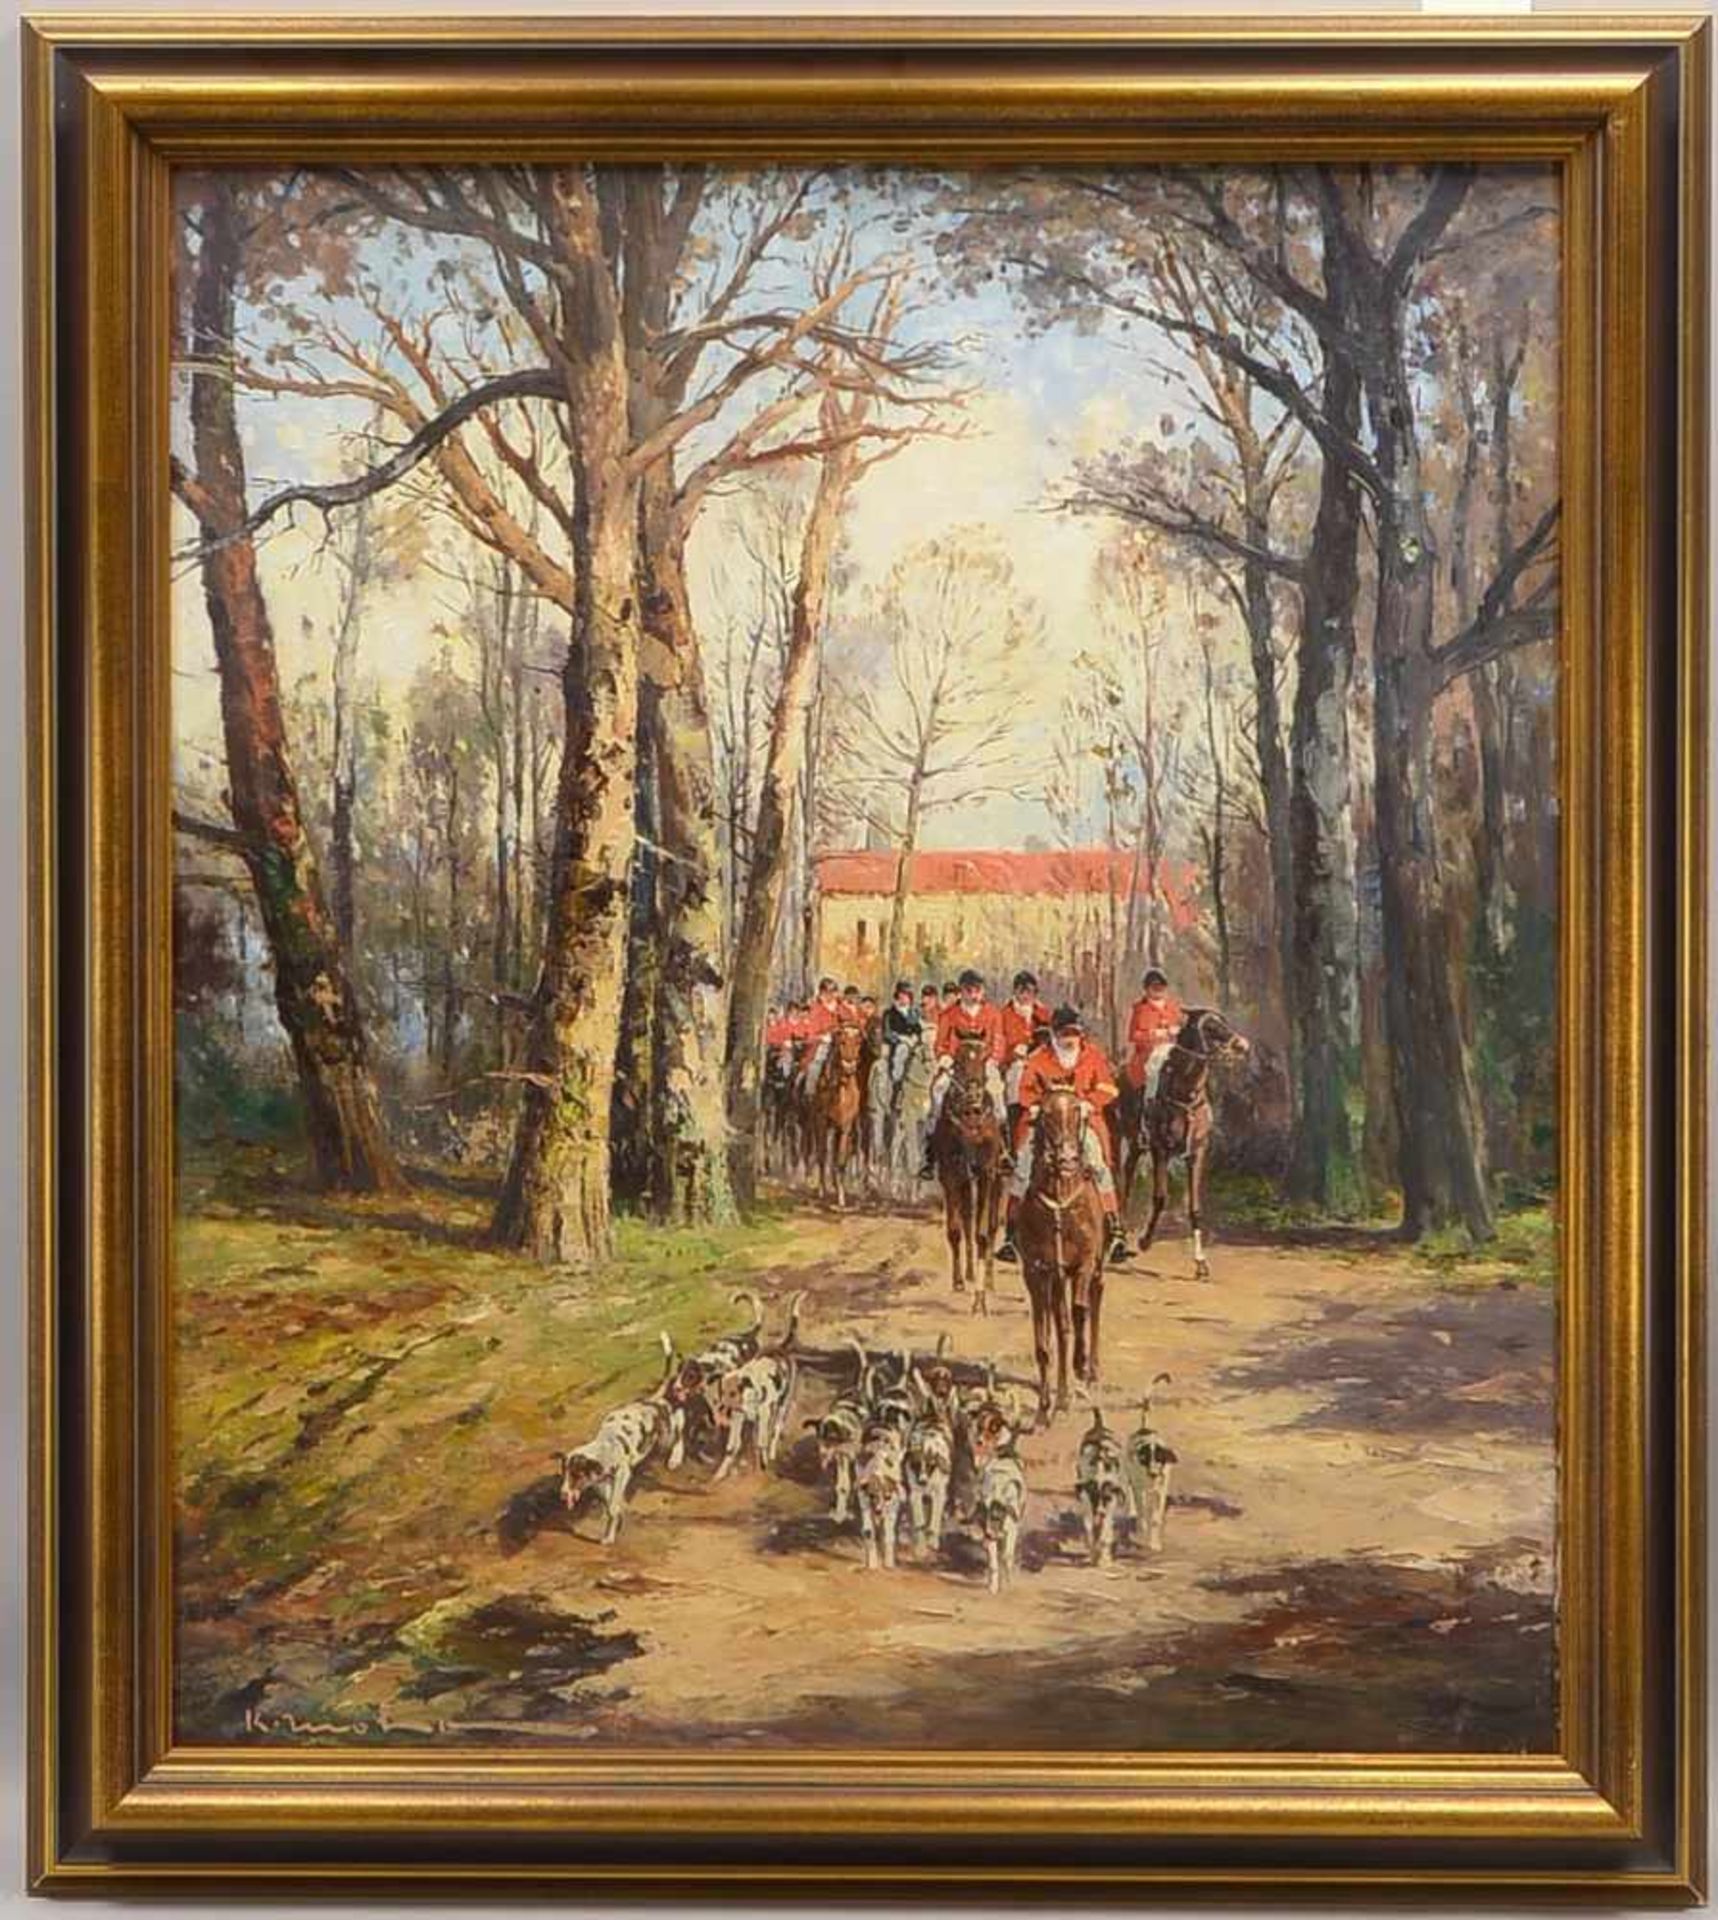 Gemälde, 'Jagdgesellschaft', Öl/Lw, unten links unleserlich signiert; Bildmaße 80 x 70 cm,